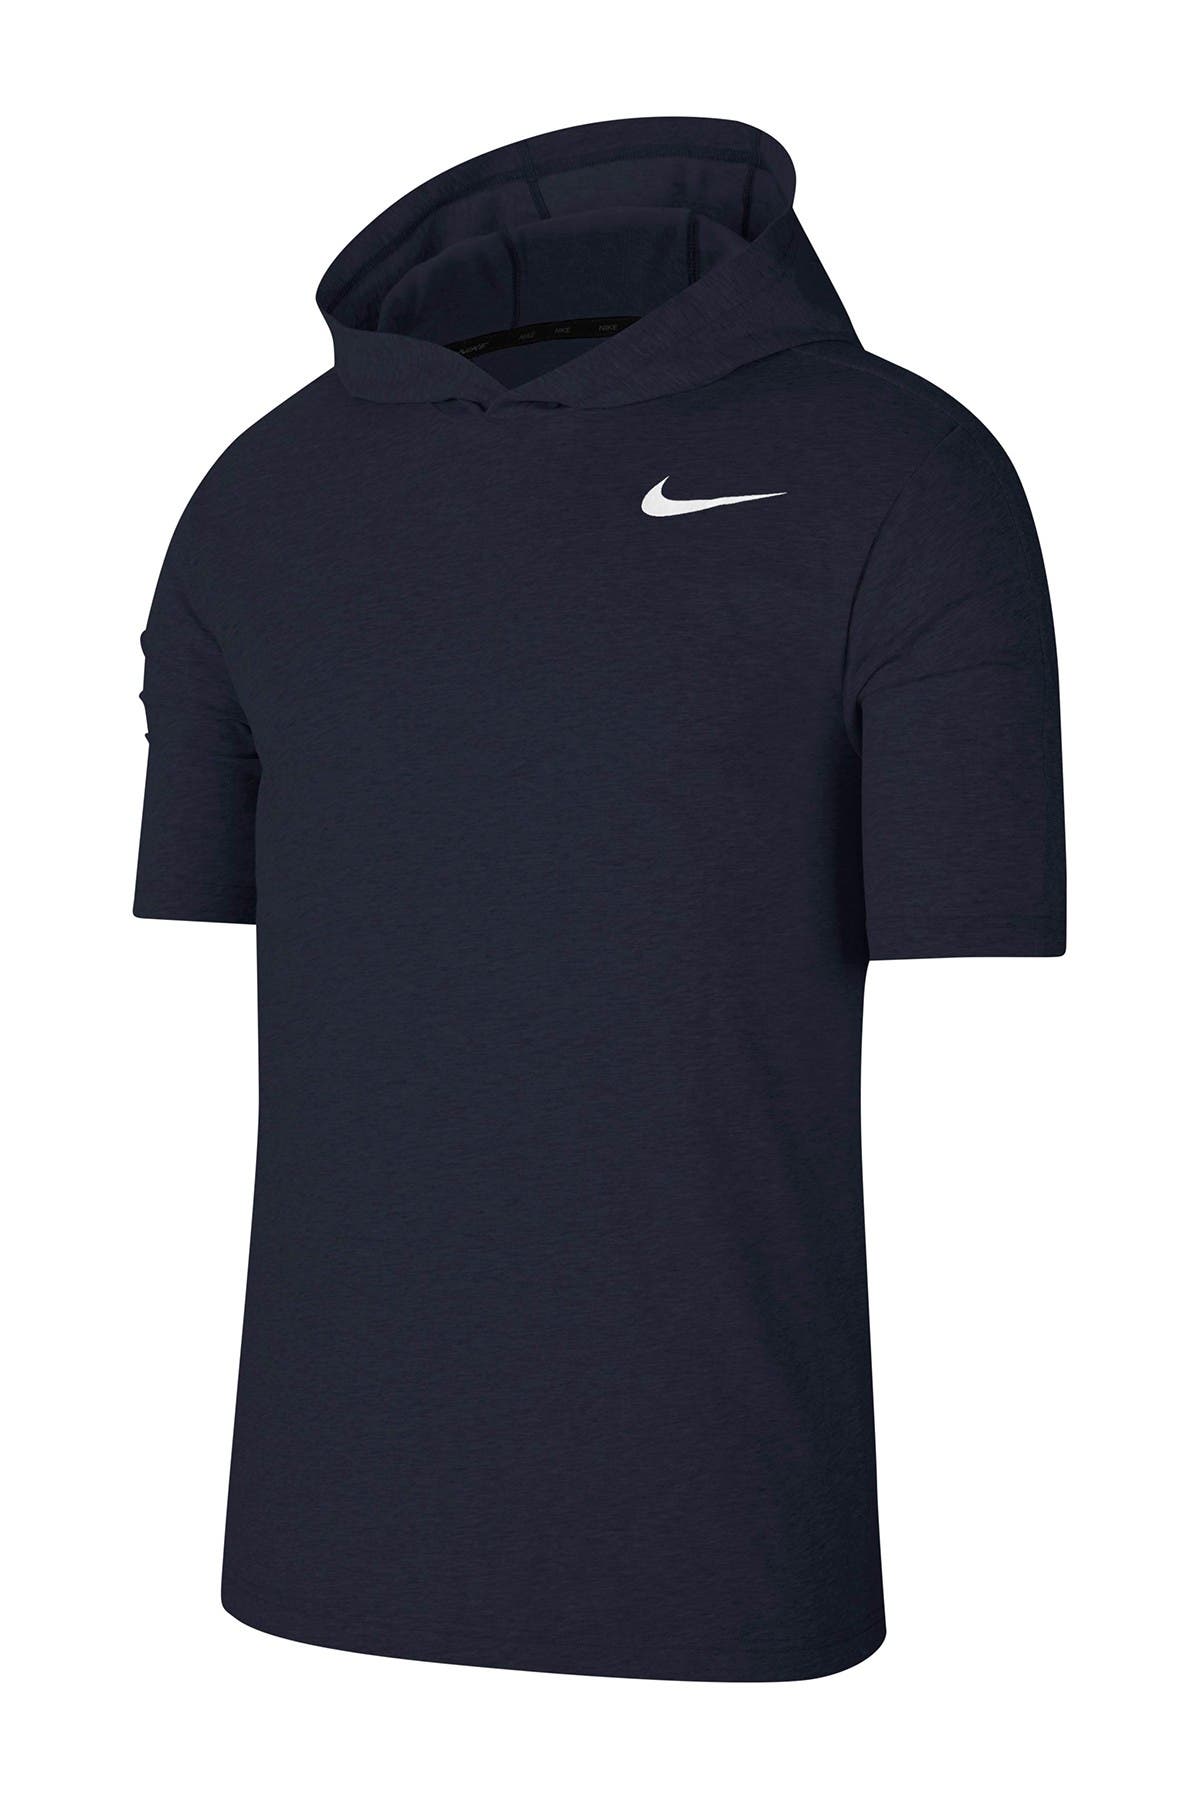 Nike | Dri-FIT Short Sleeve Training 